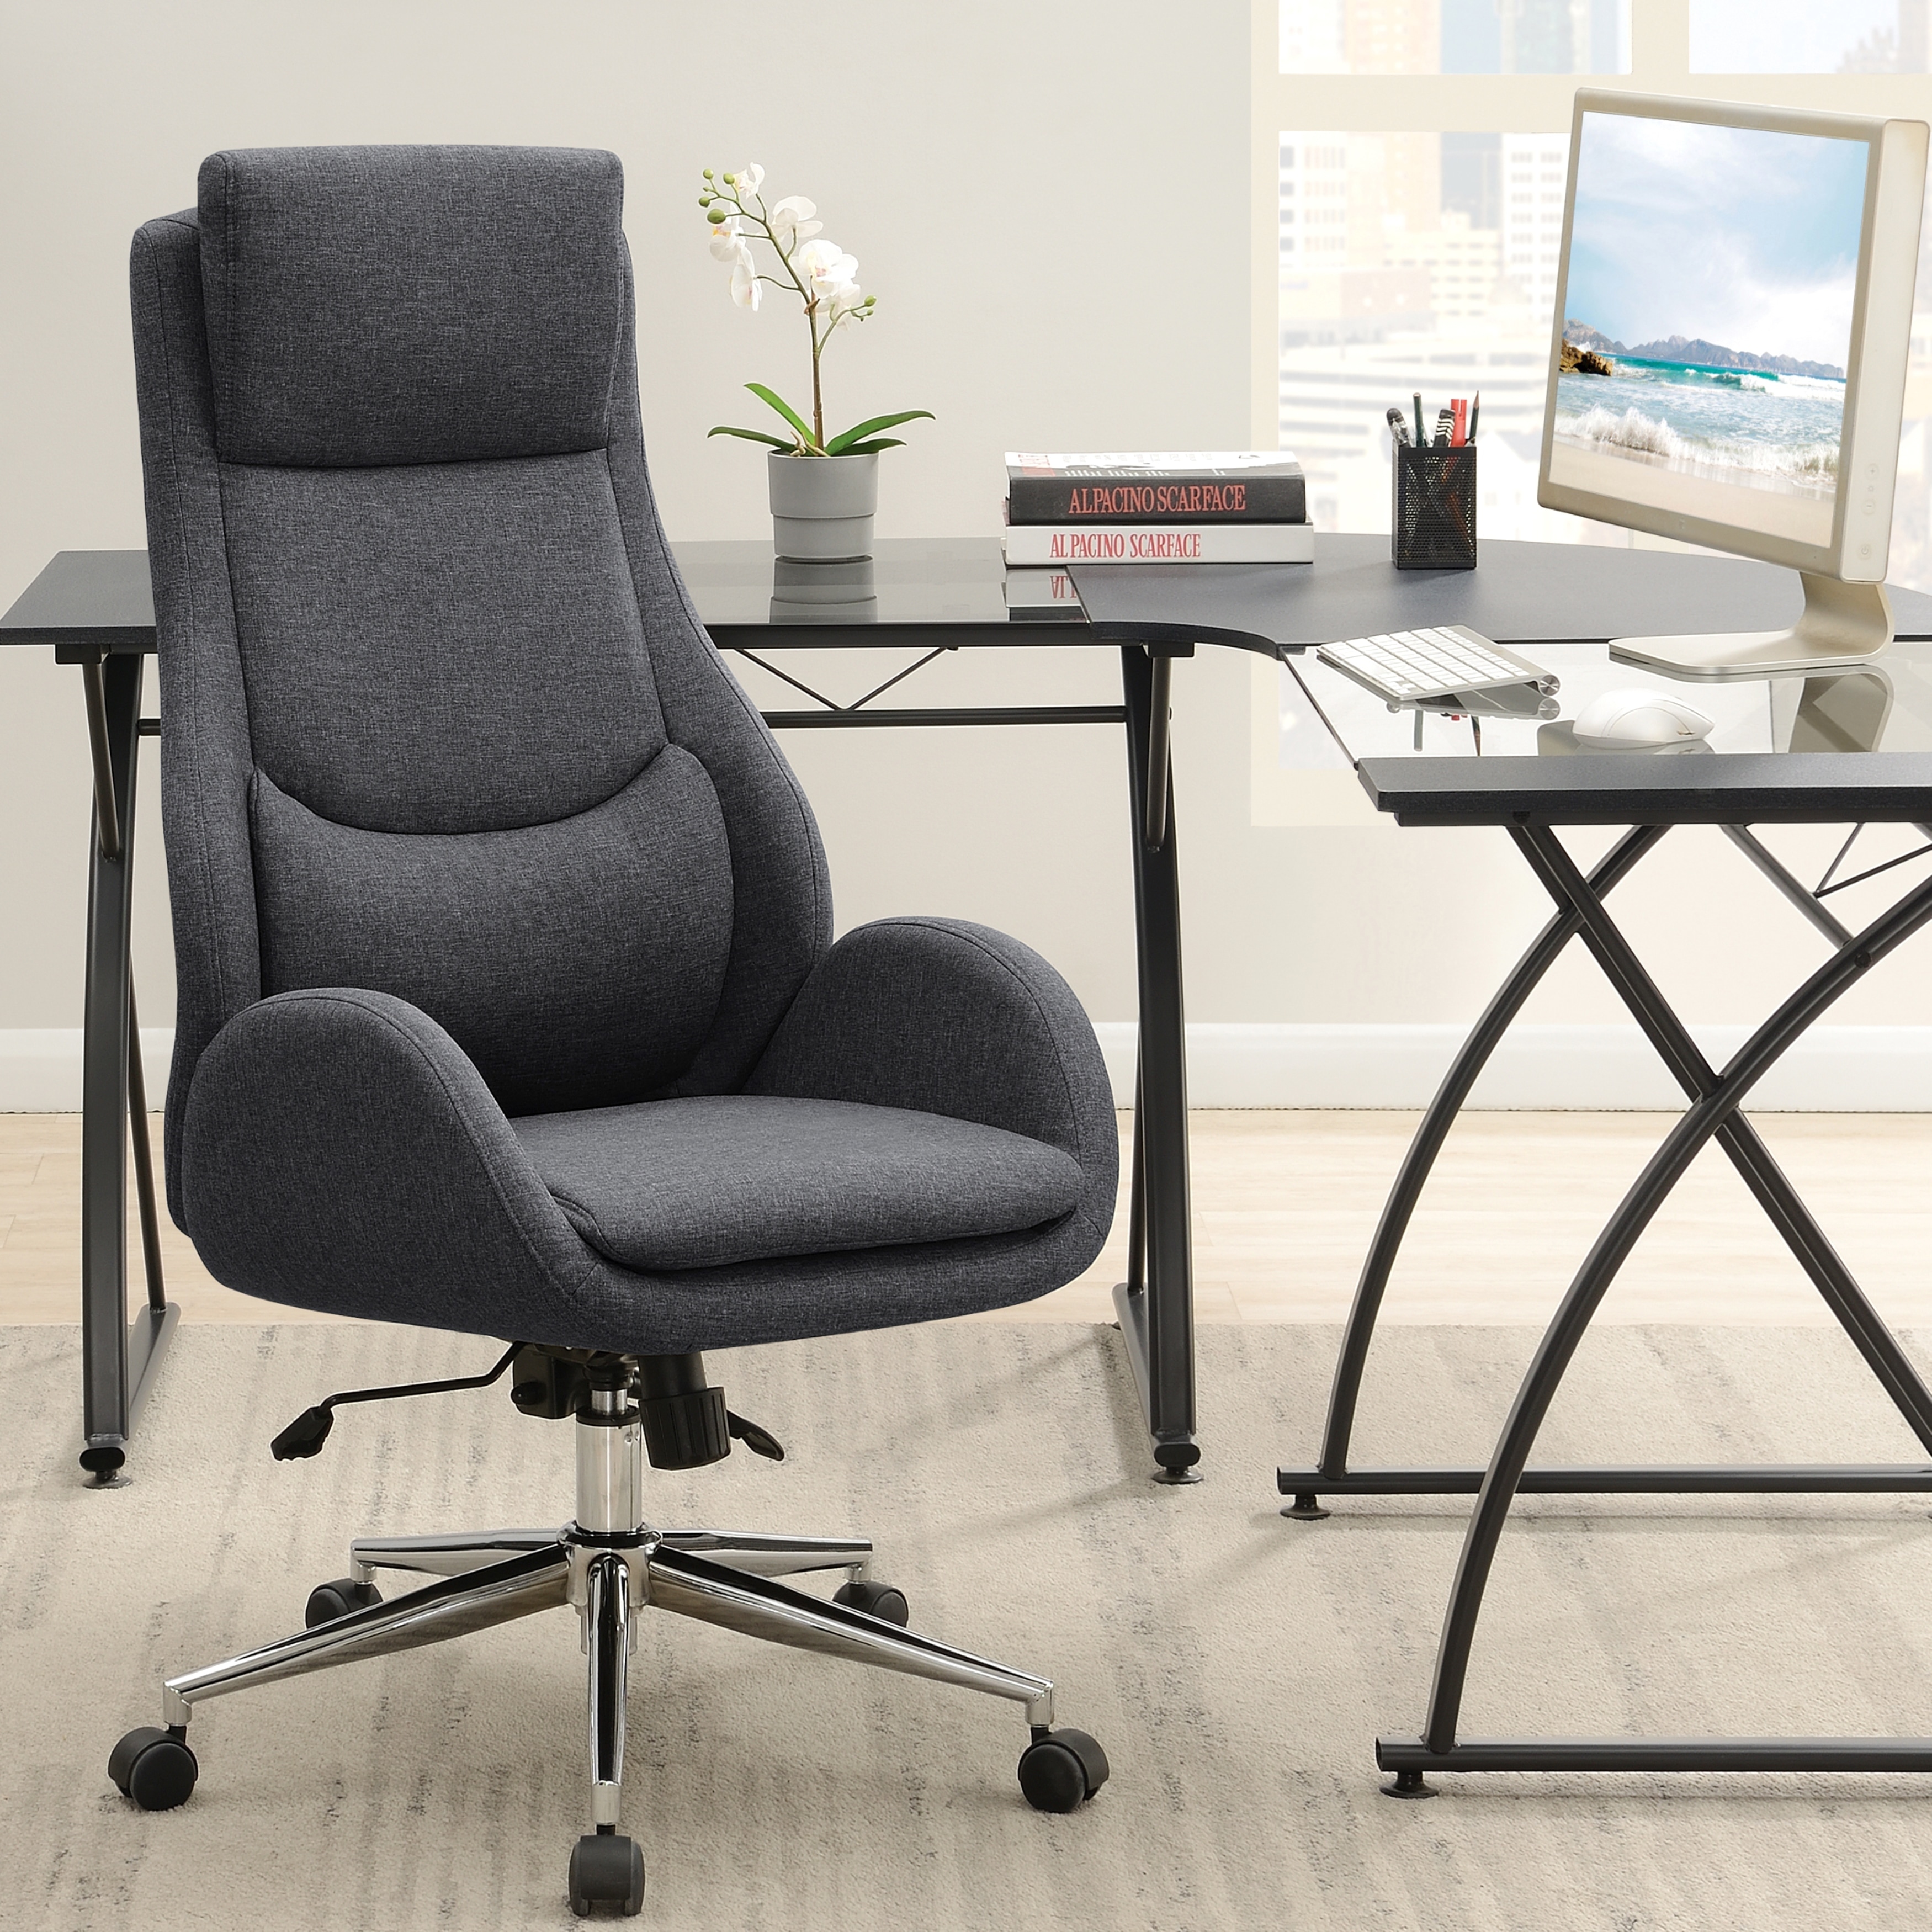 desk office chair adjustable fabric black grey 